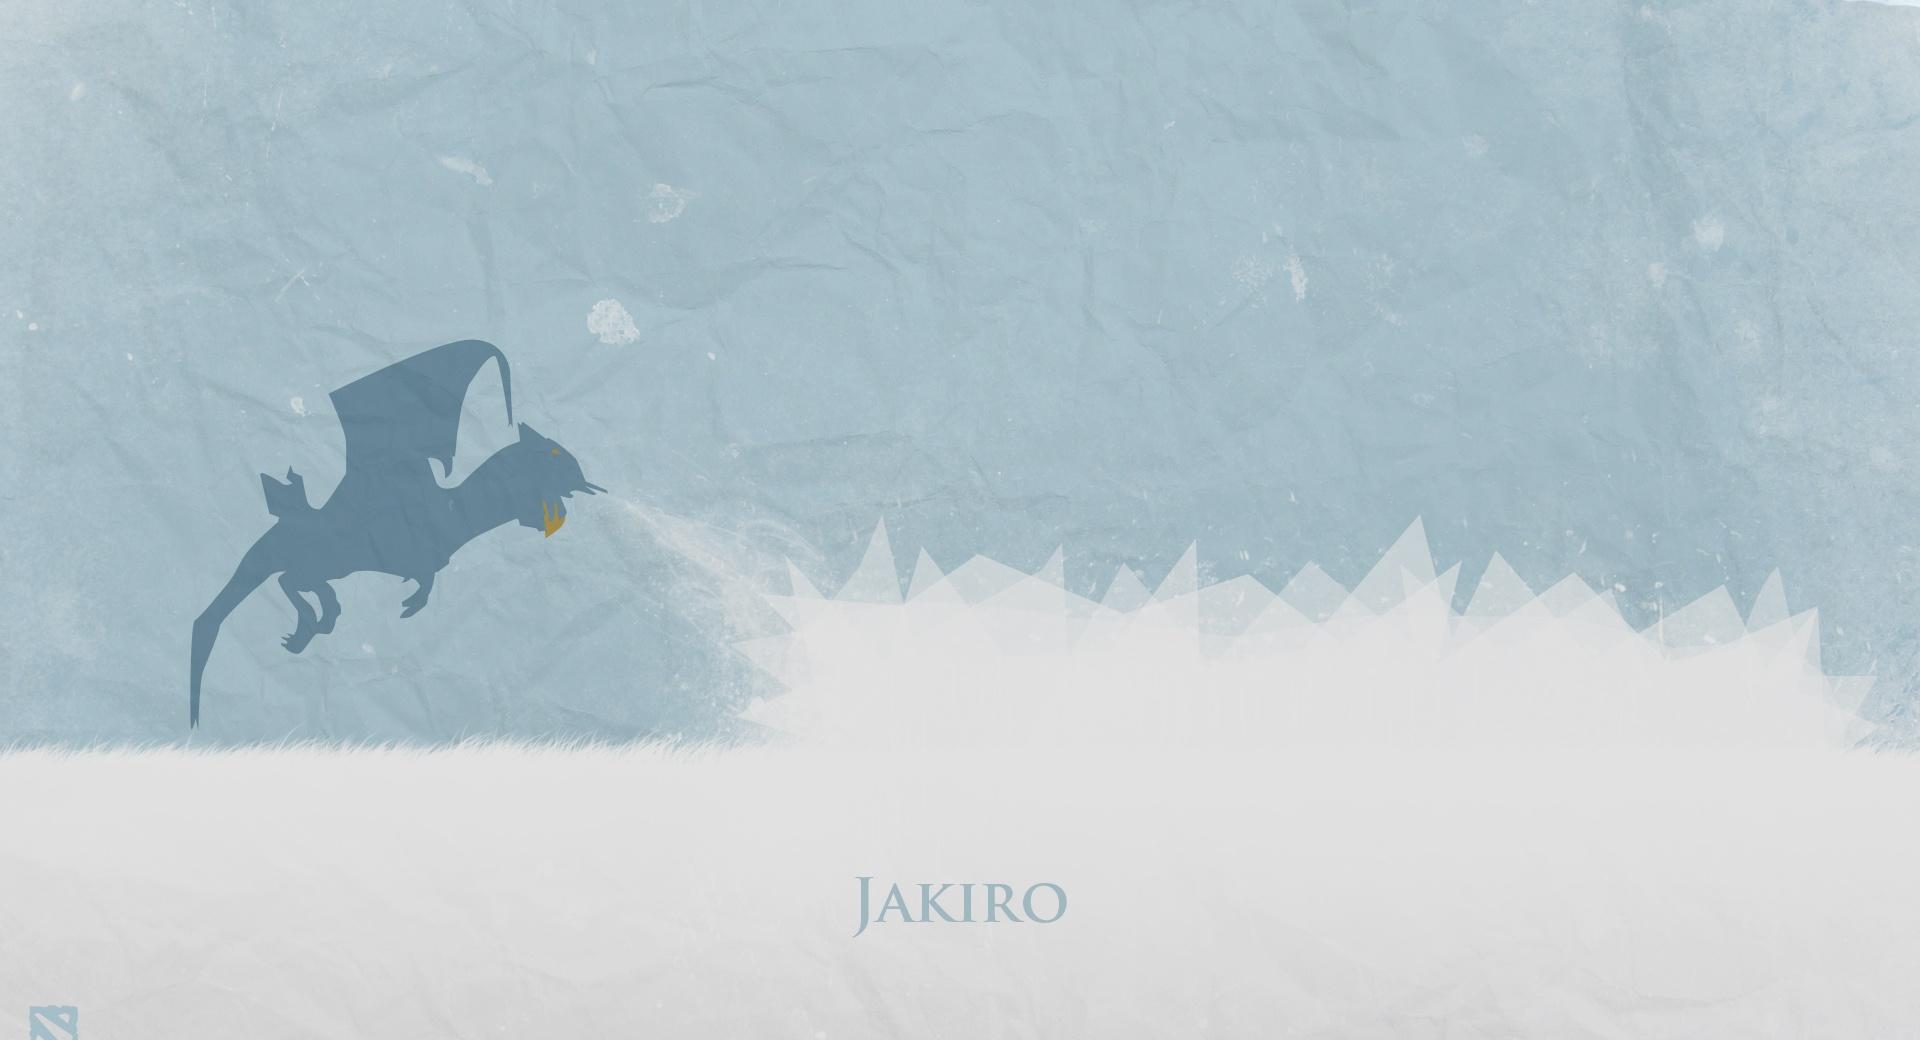 Jakiro - DotA 2 at 1024 x 1024 iPad size wallpapers HD quality